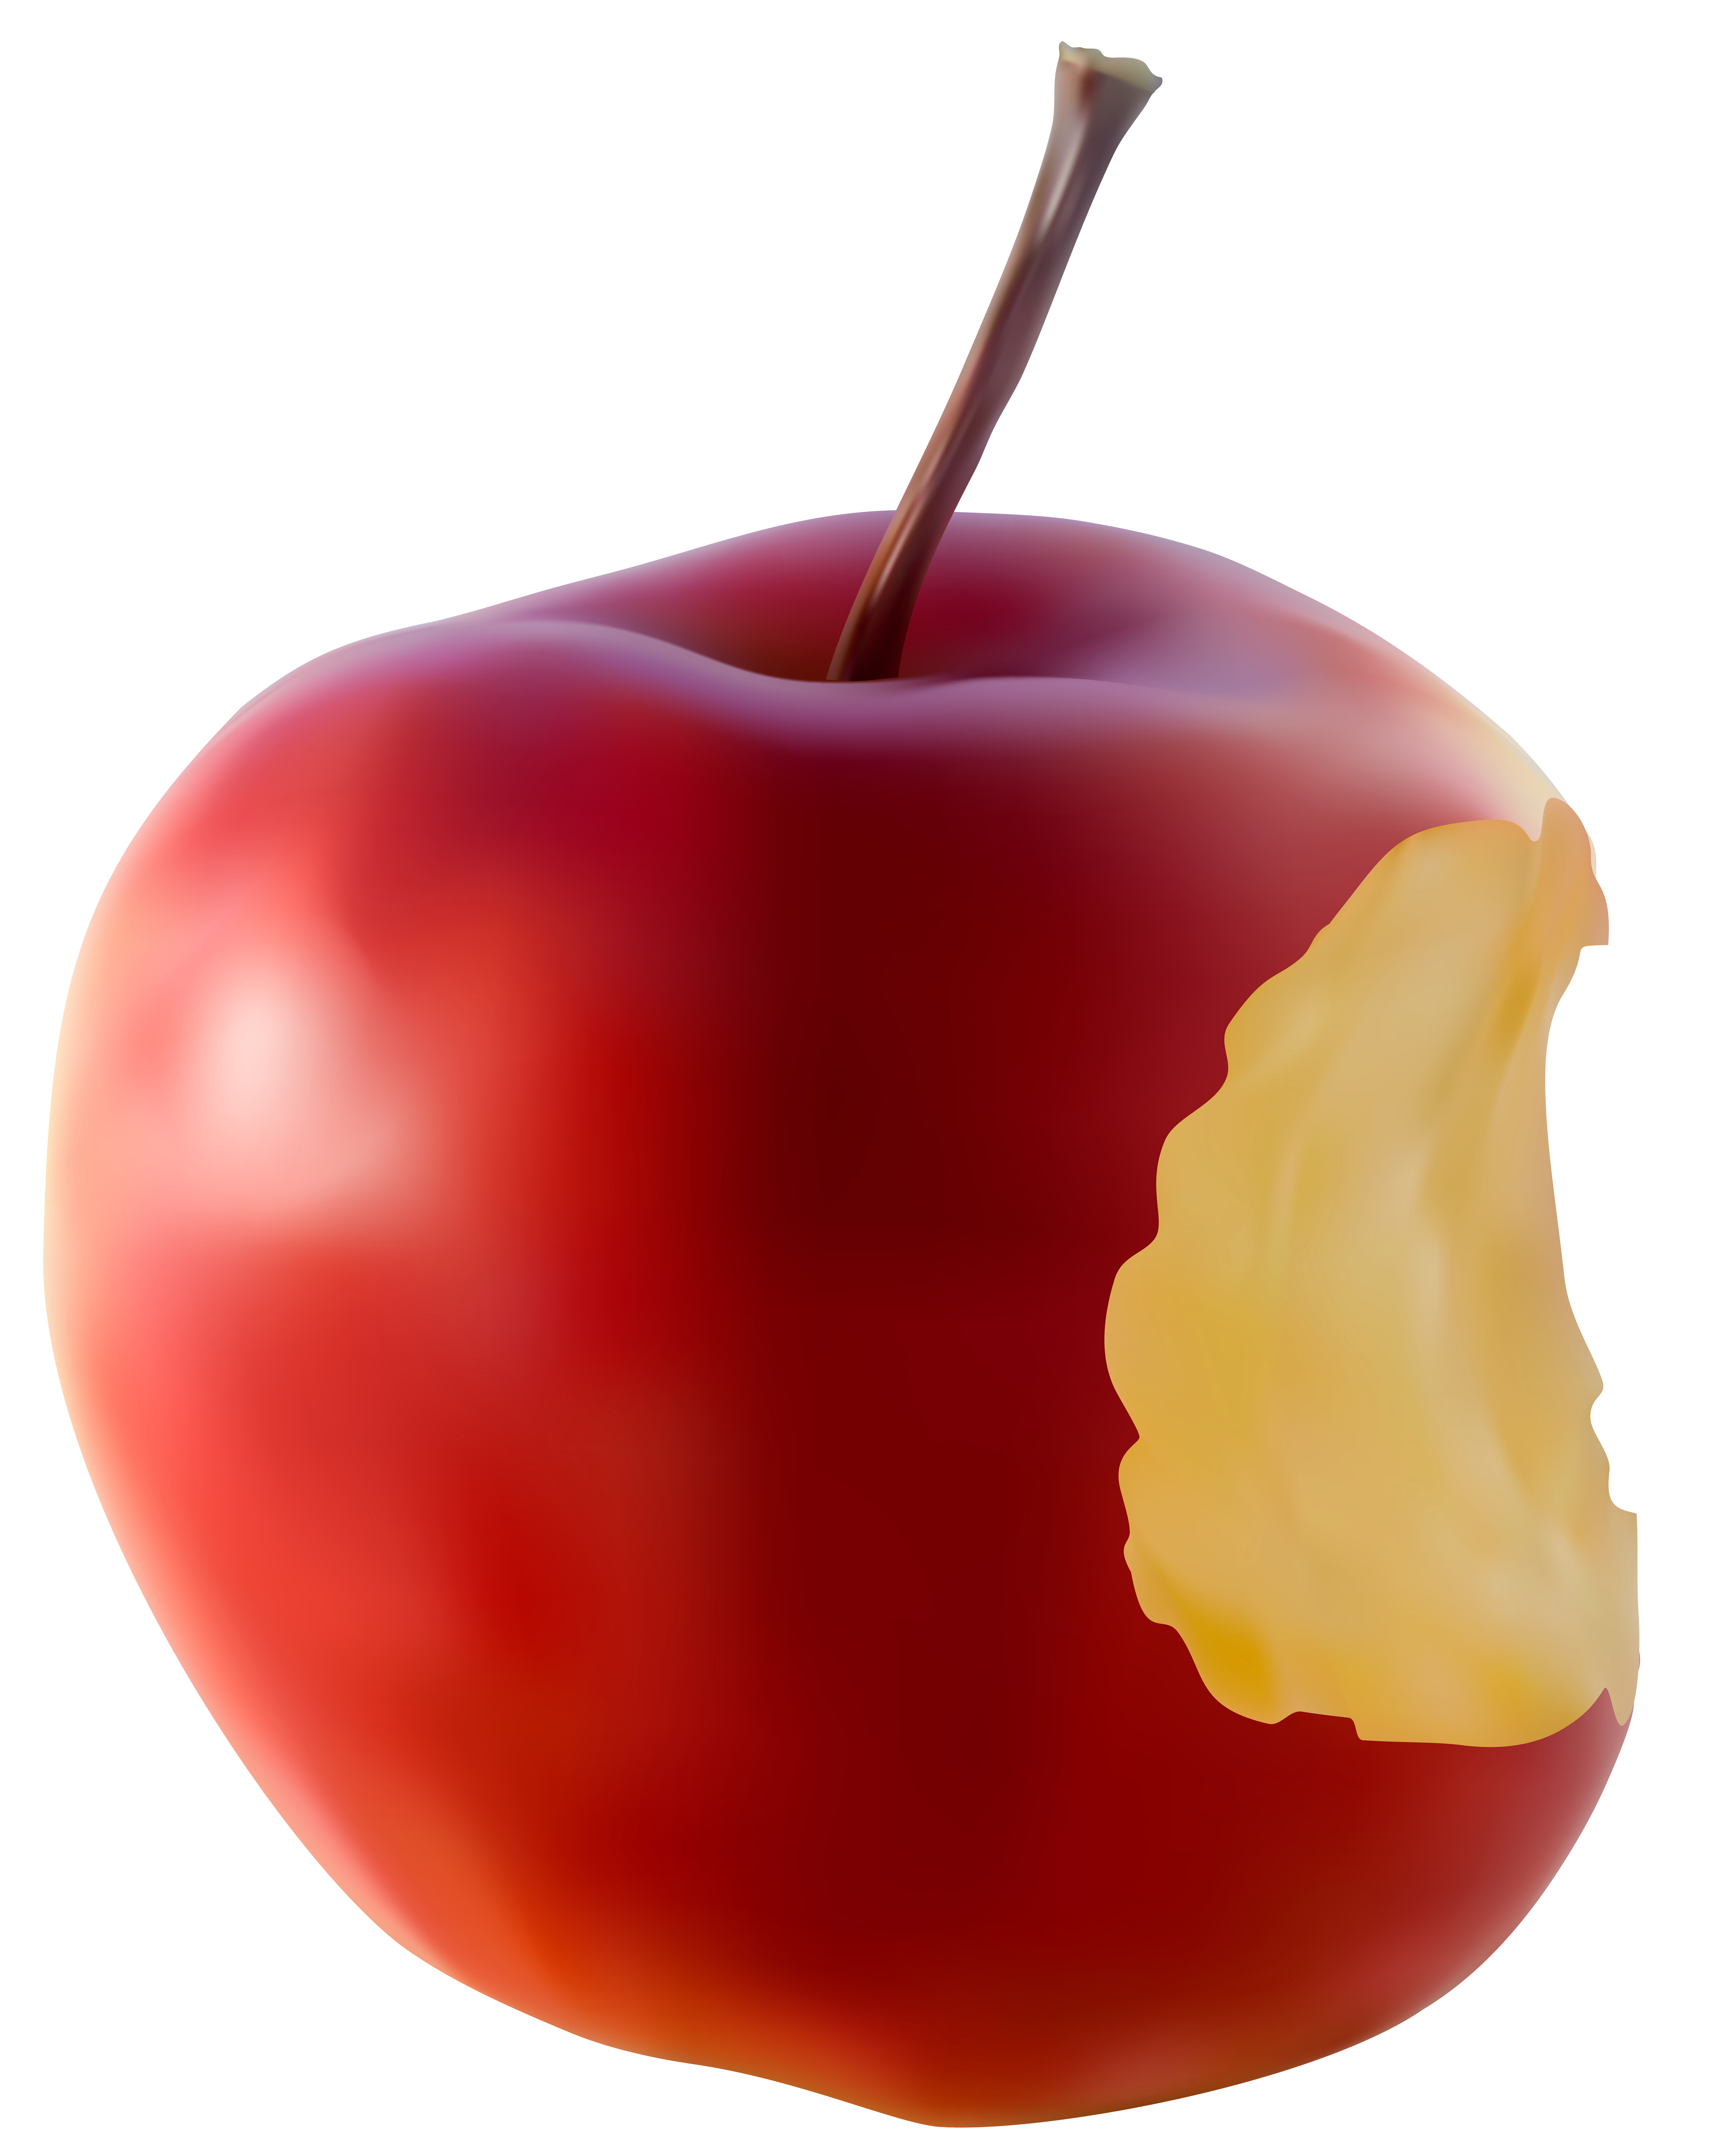 Bitten Apple Red Transparent Clip Art Image 